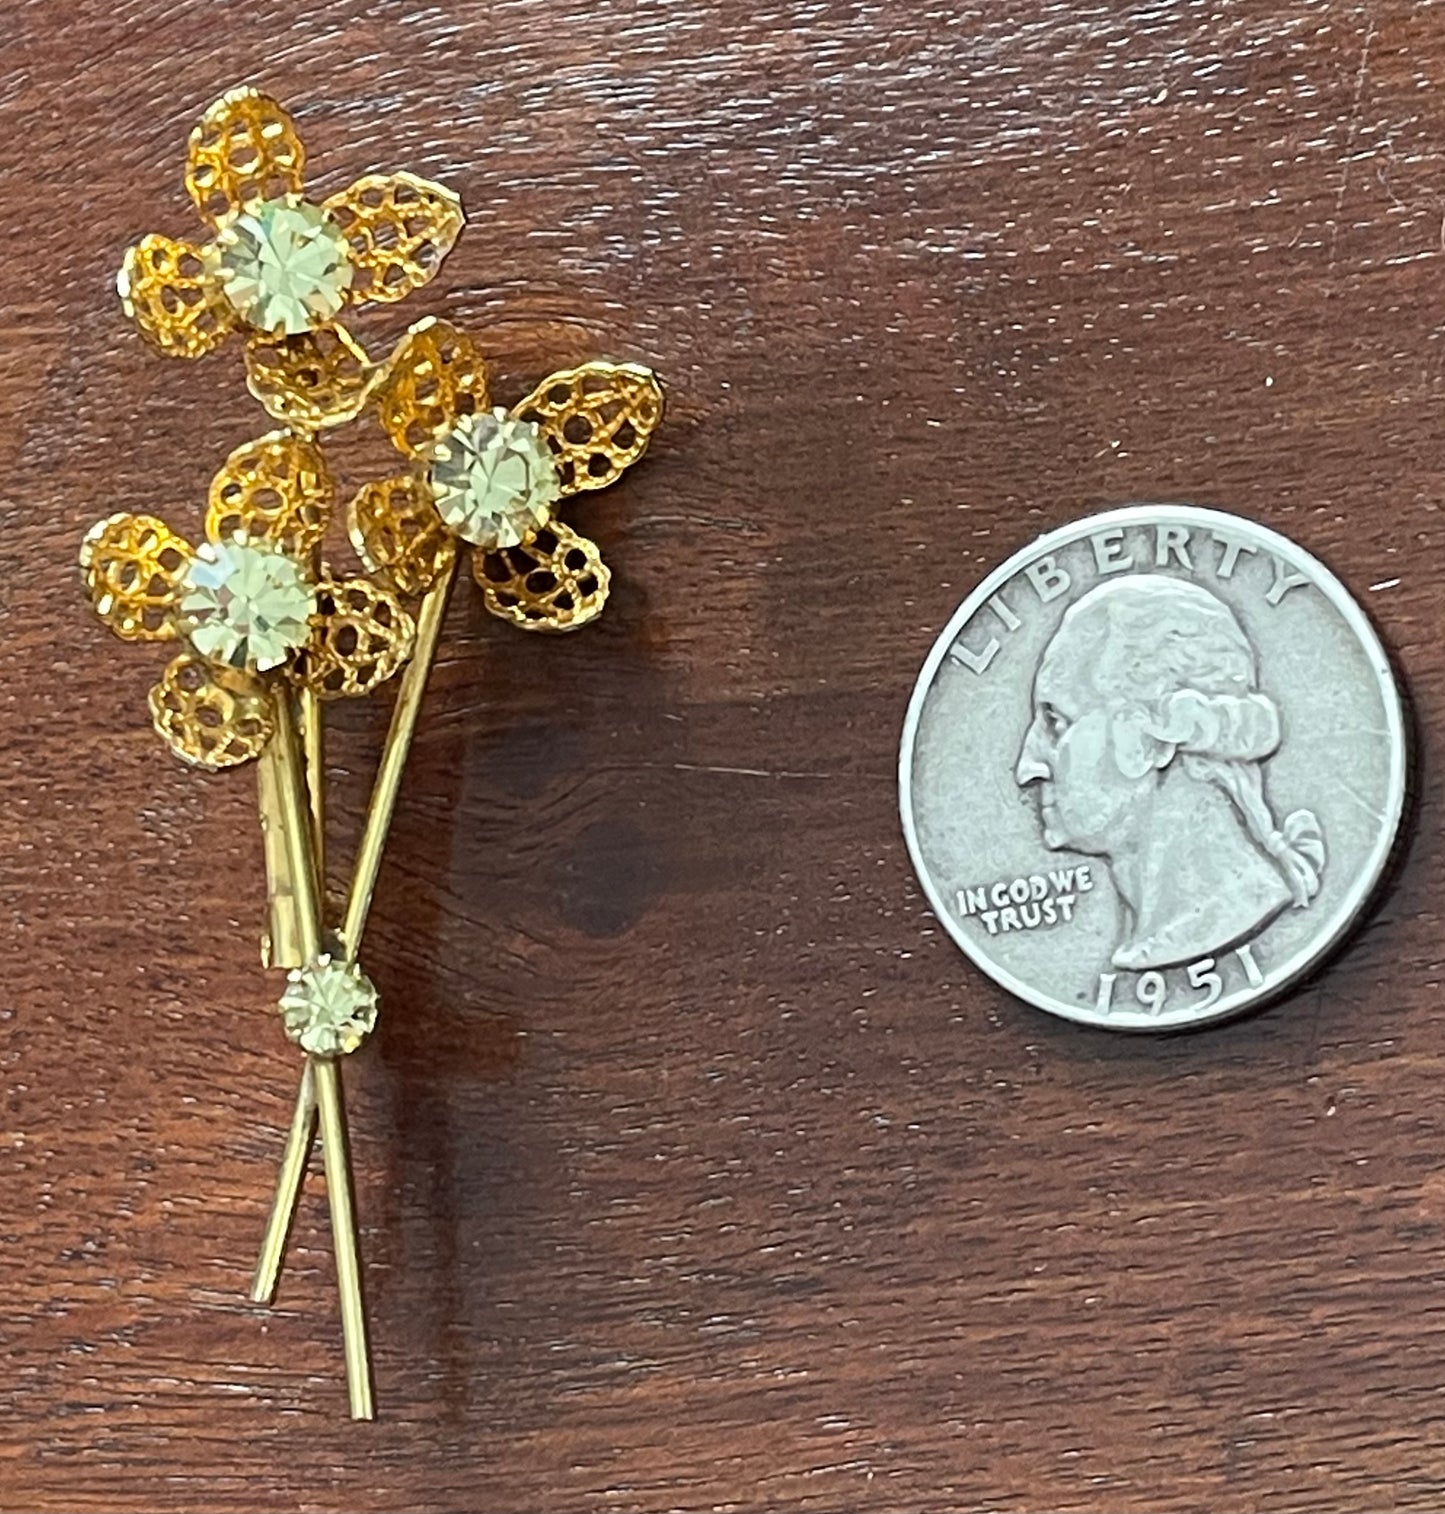 Vintage Gold Tone Metal Flower Brooch Pin w Green Rhinestones Stones